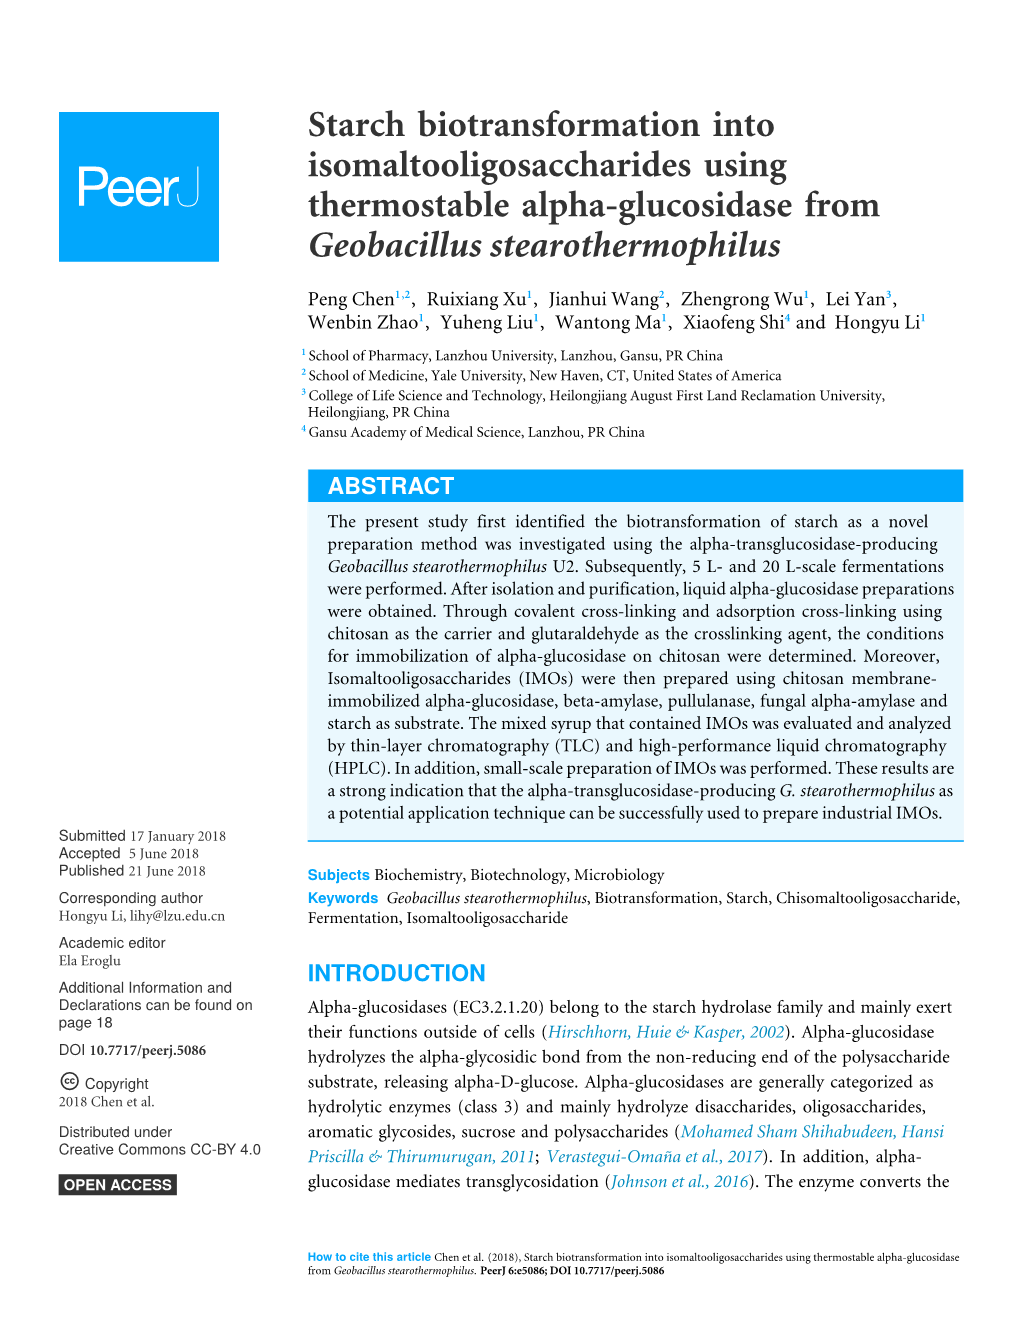 Starch Biotransformation Into Isomaltooligosaccharides Using Thermostable Alpha-Glucosidase from Geobacillus Stearothermophilus